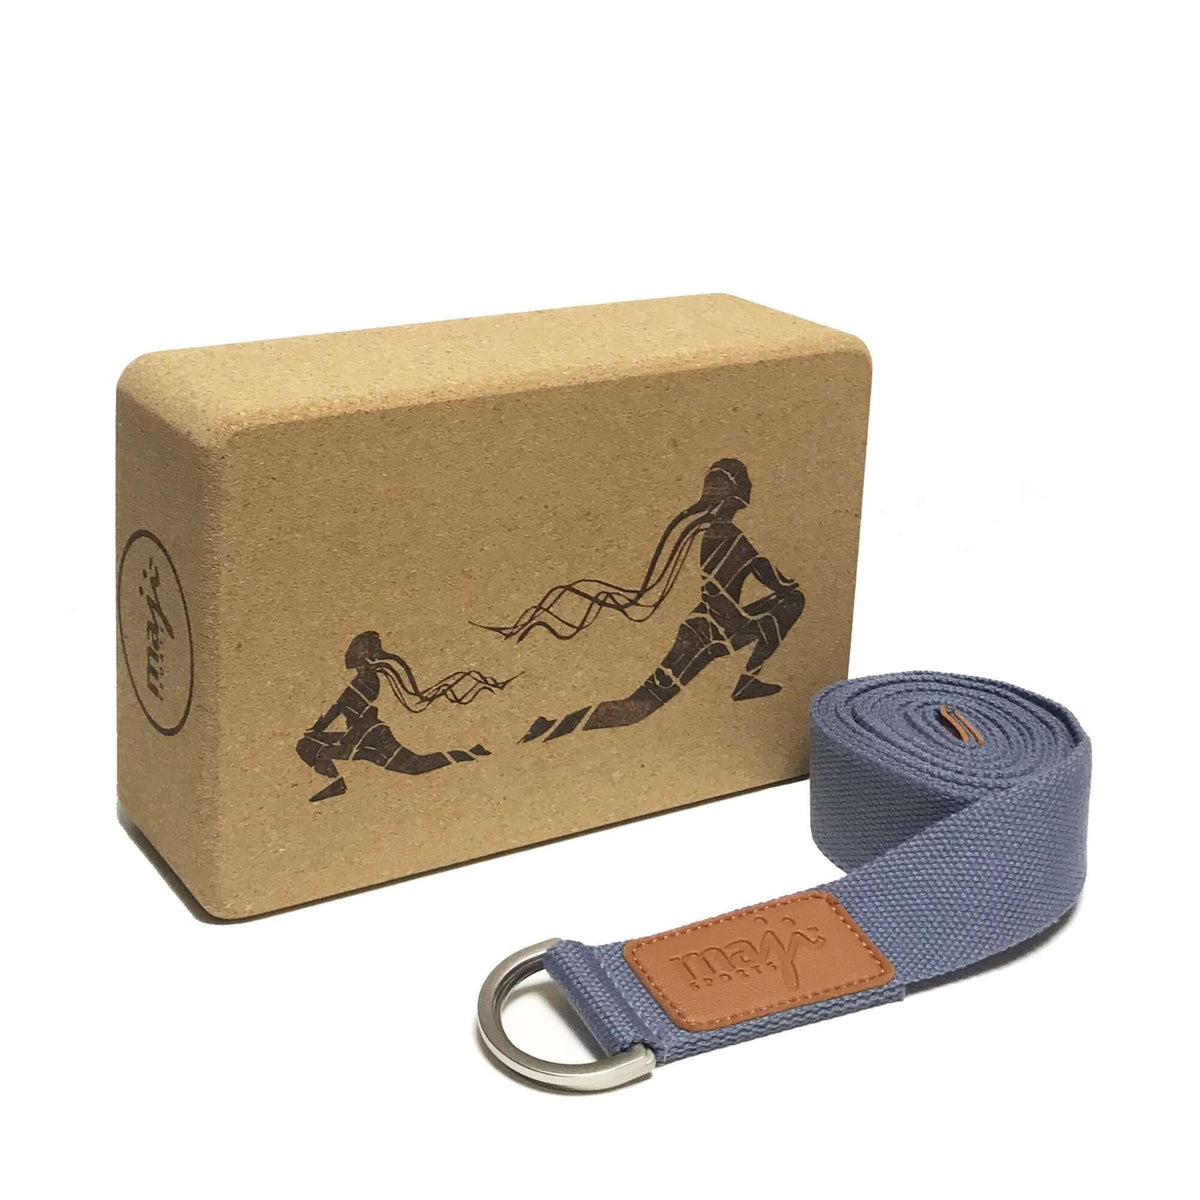 Laser Engraved Cork Yoga Block & Strap Combo by Jupiter Gear